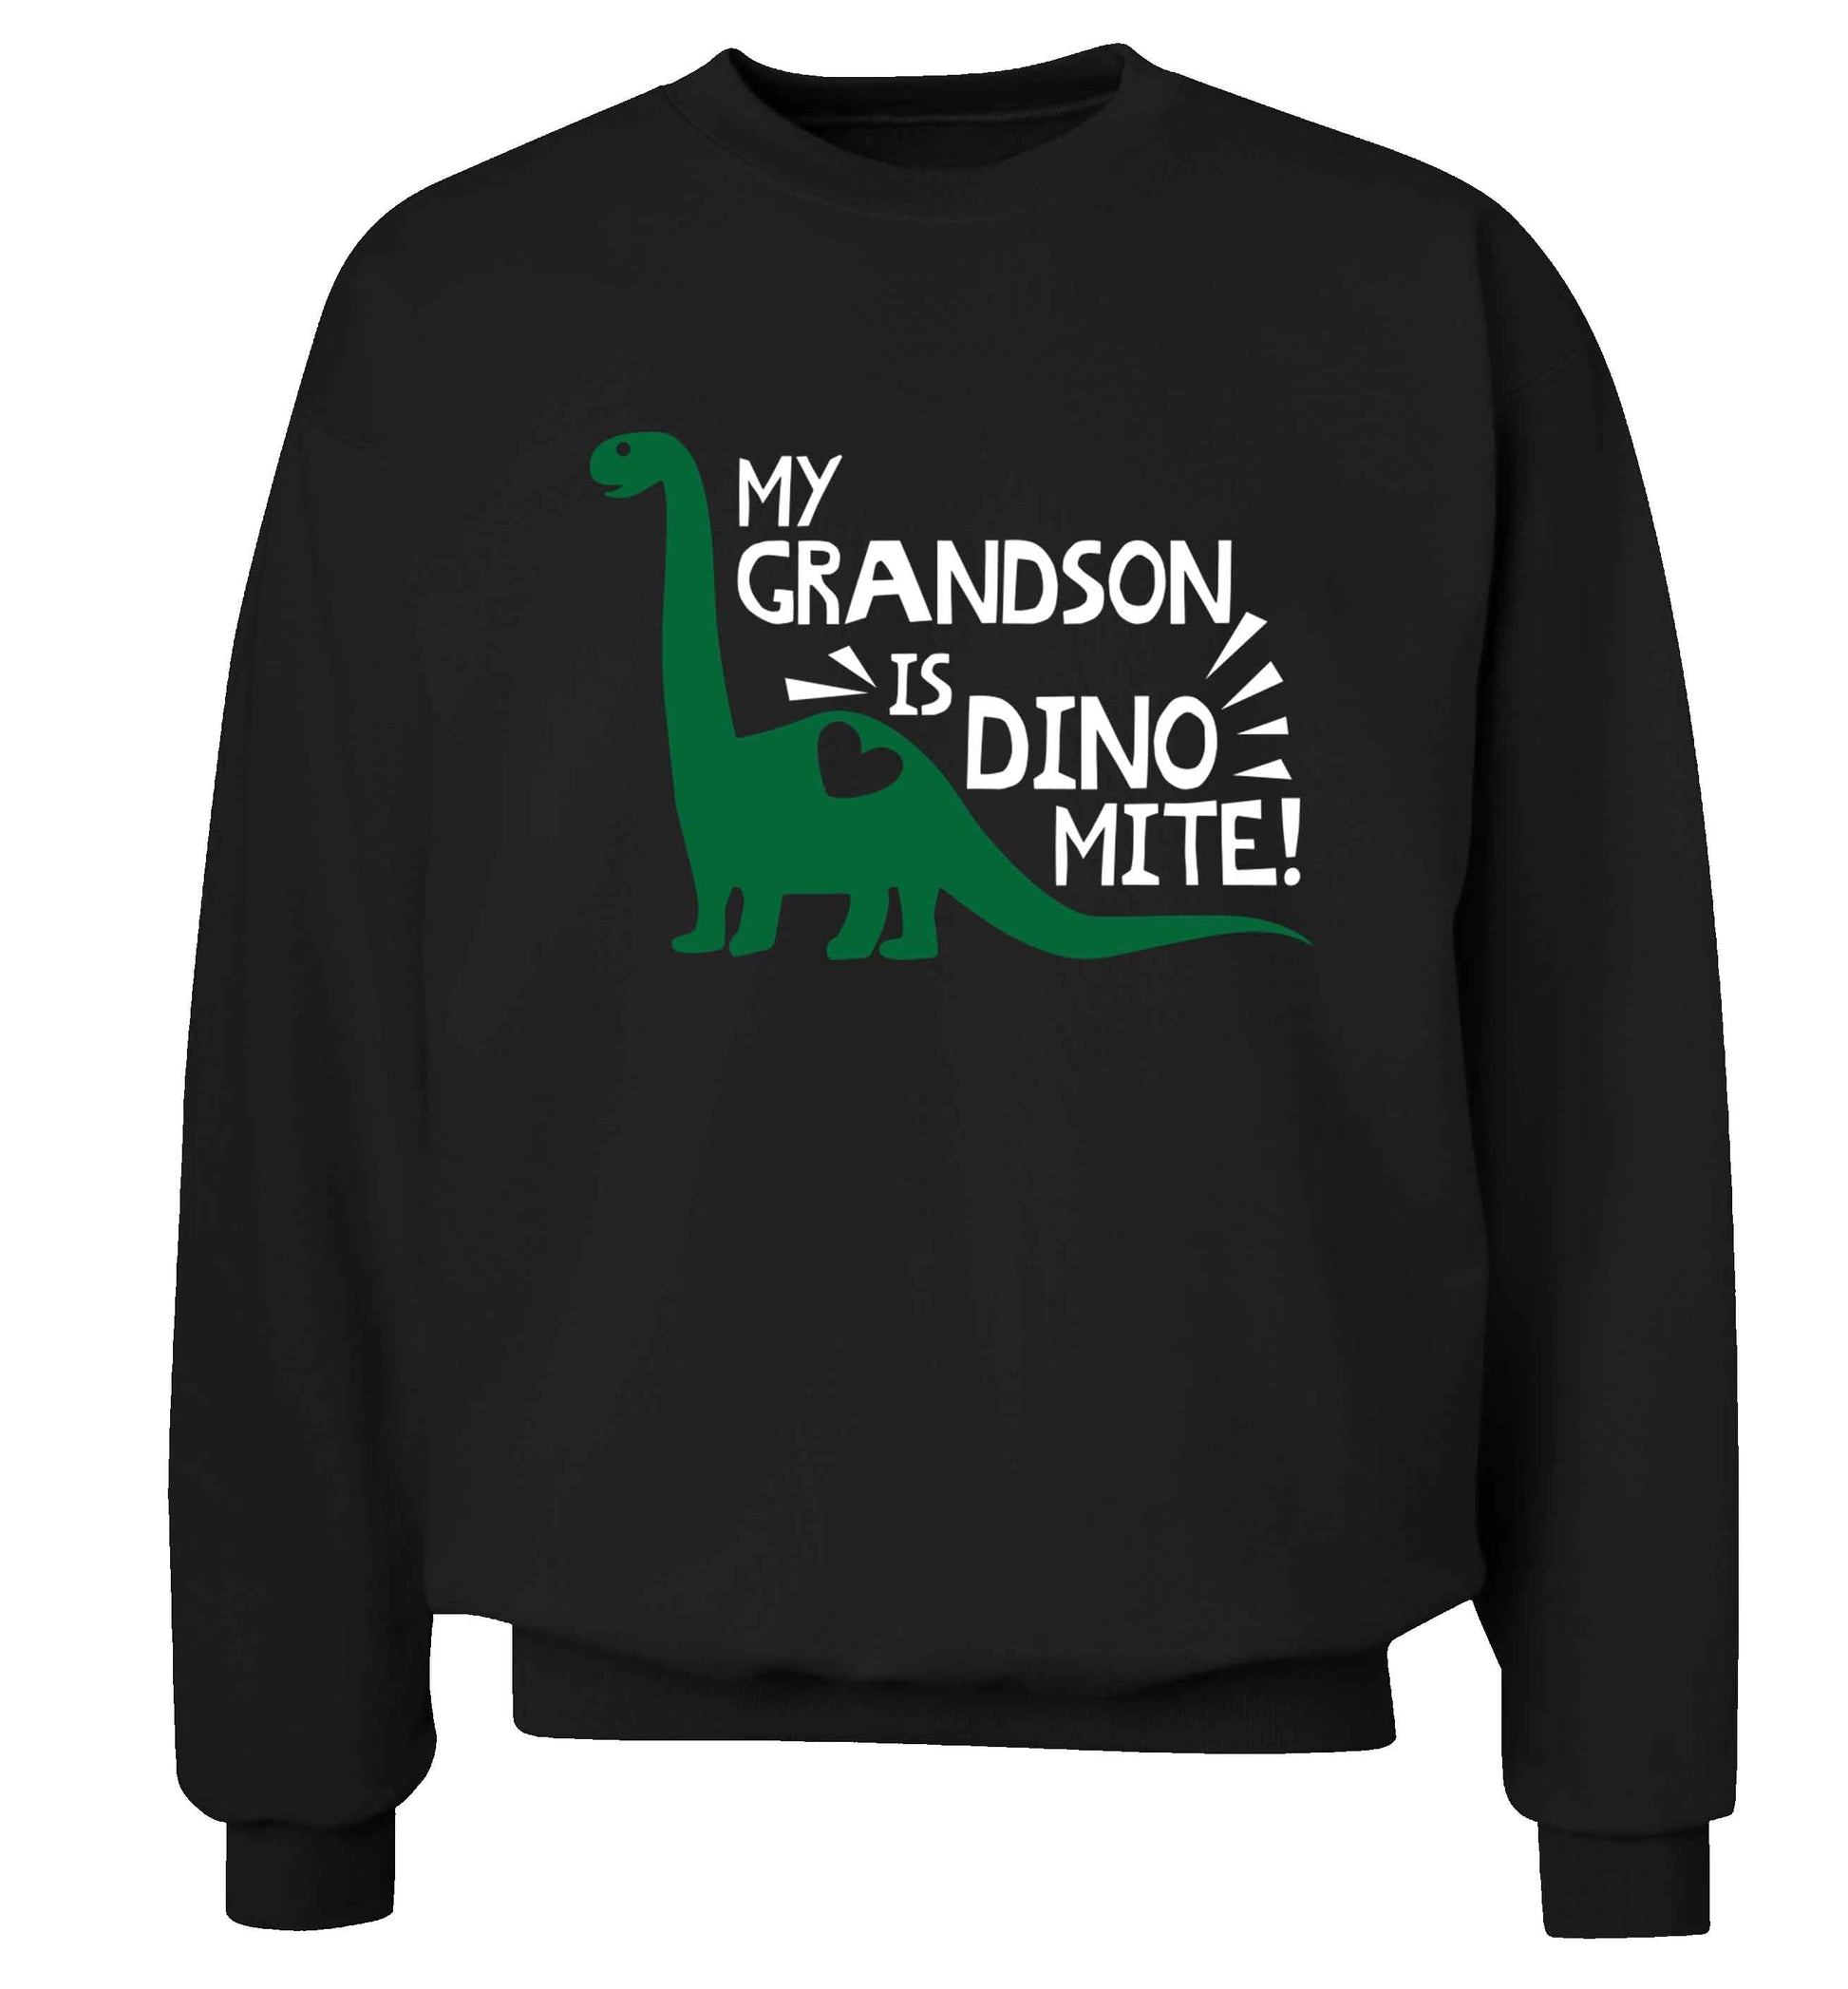 My grandson is dinomite! Adult's unisex black Sweater 2XL